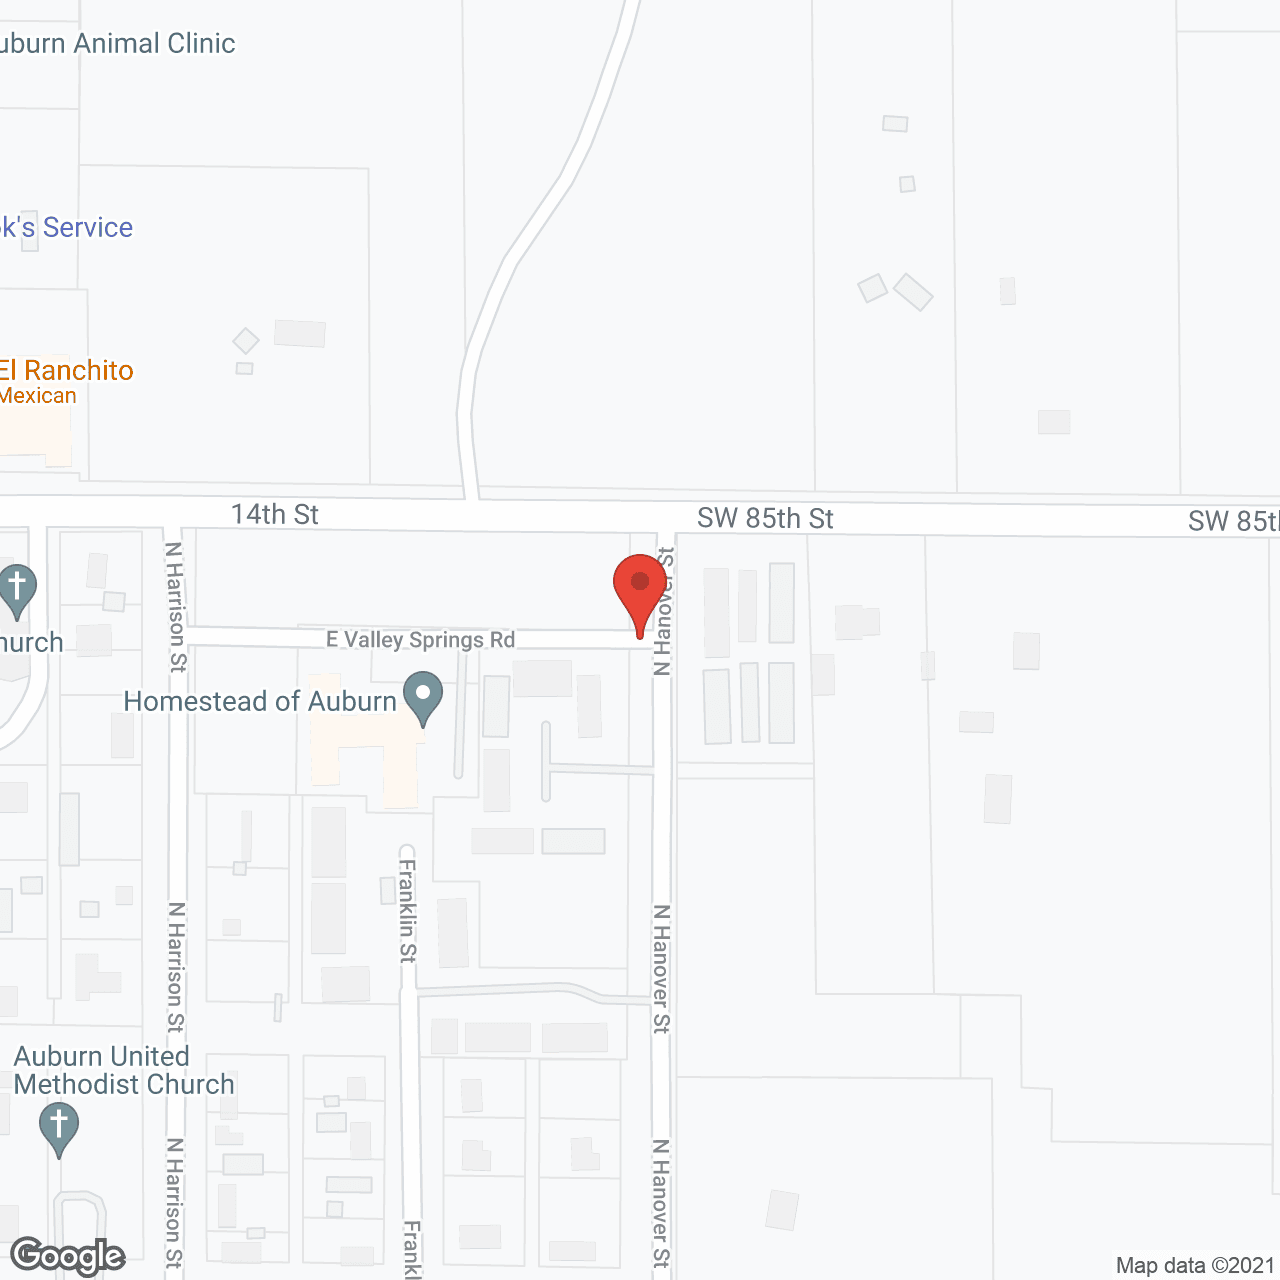 Homestead of Auburn in google map